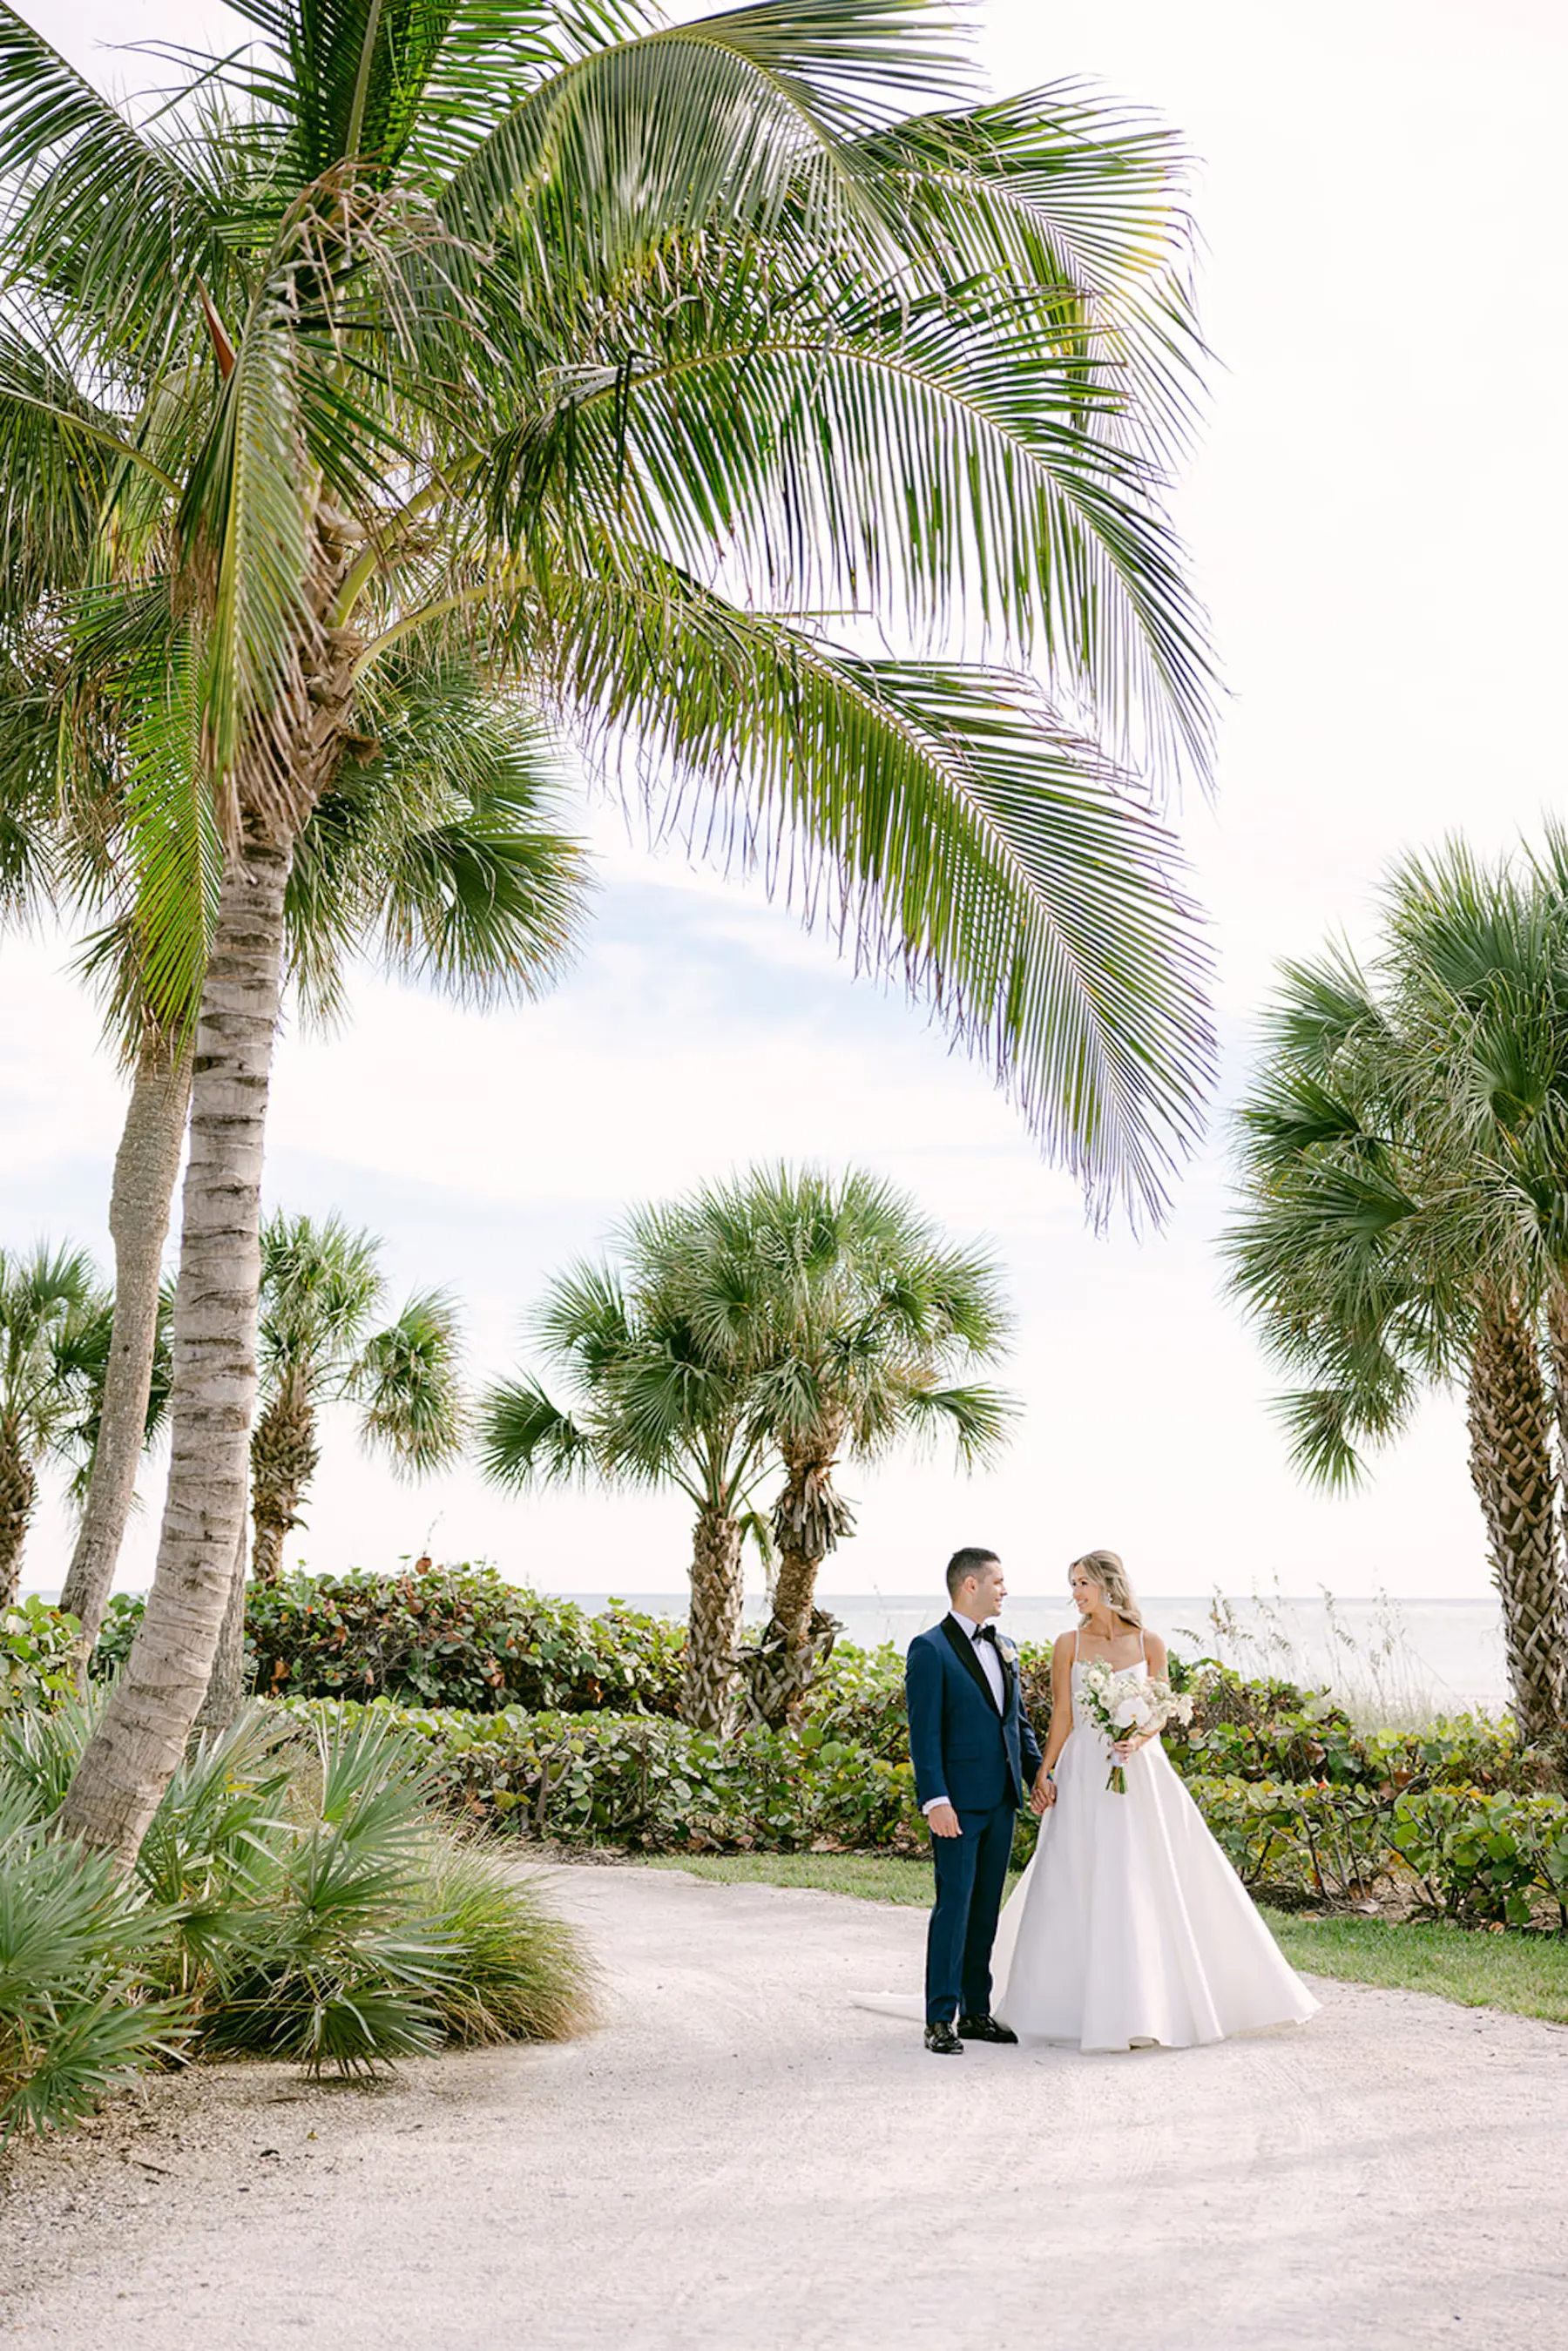 Bride and Groom First Look Wedding Portrait | Sarasota Waterfront Beach Venue The Resort at Longboat Key Club | Planner Elegant Affairs by Design